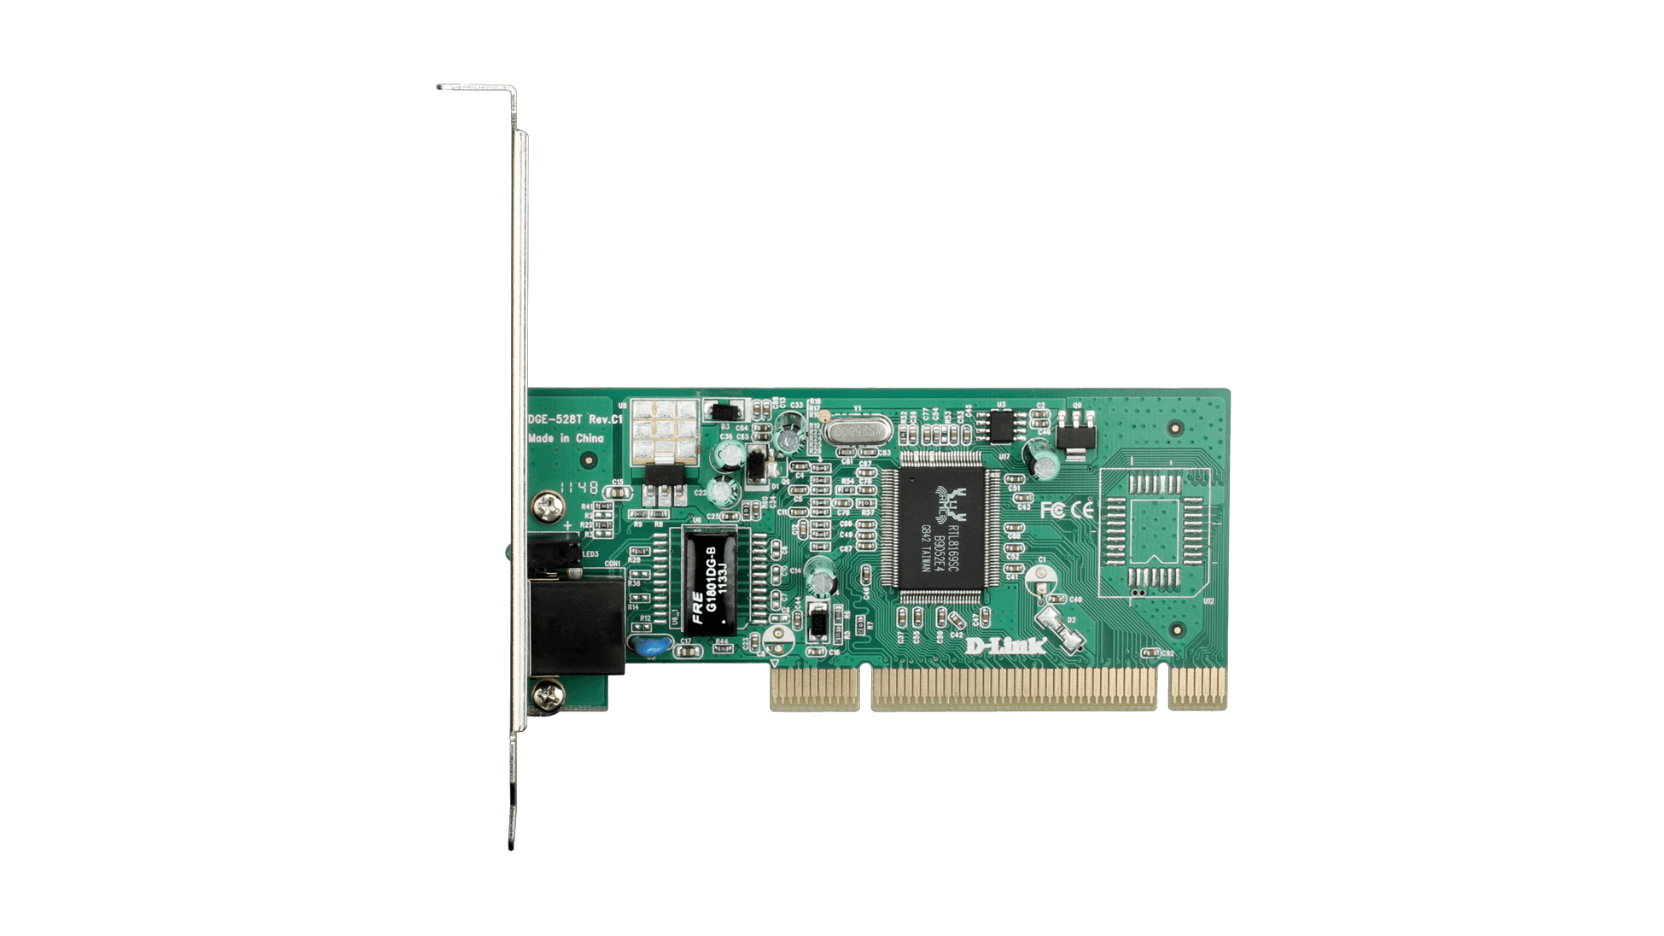 Download Adaptec AIC-7899 Ultra160 PCI SCSI Card Driver